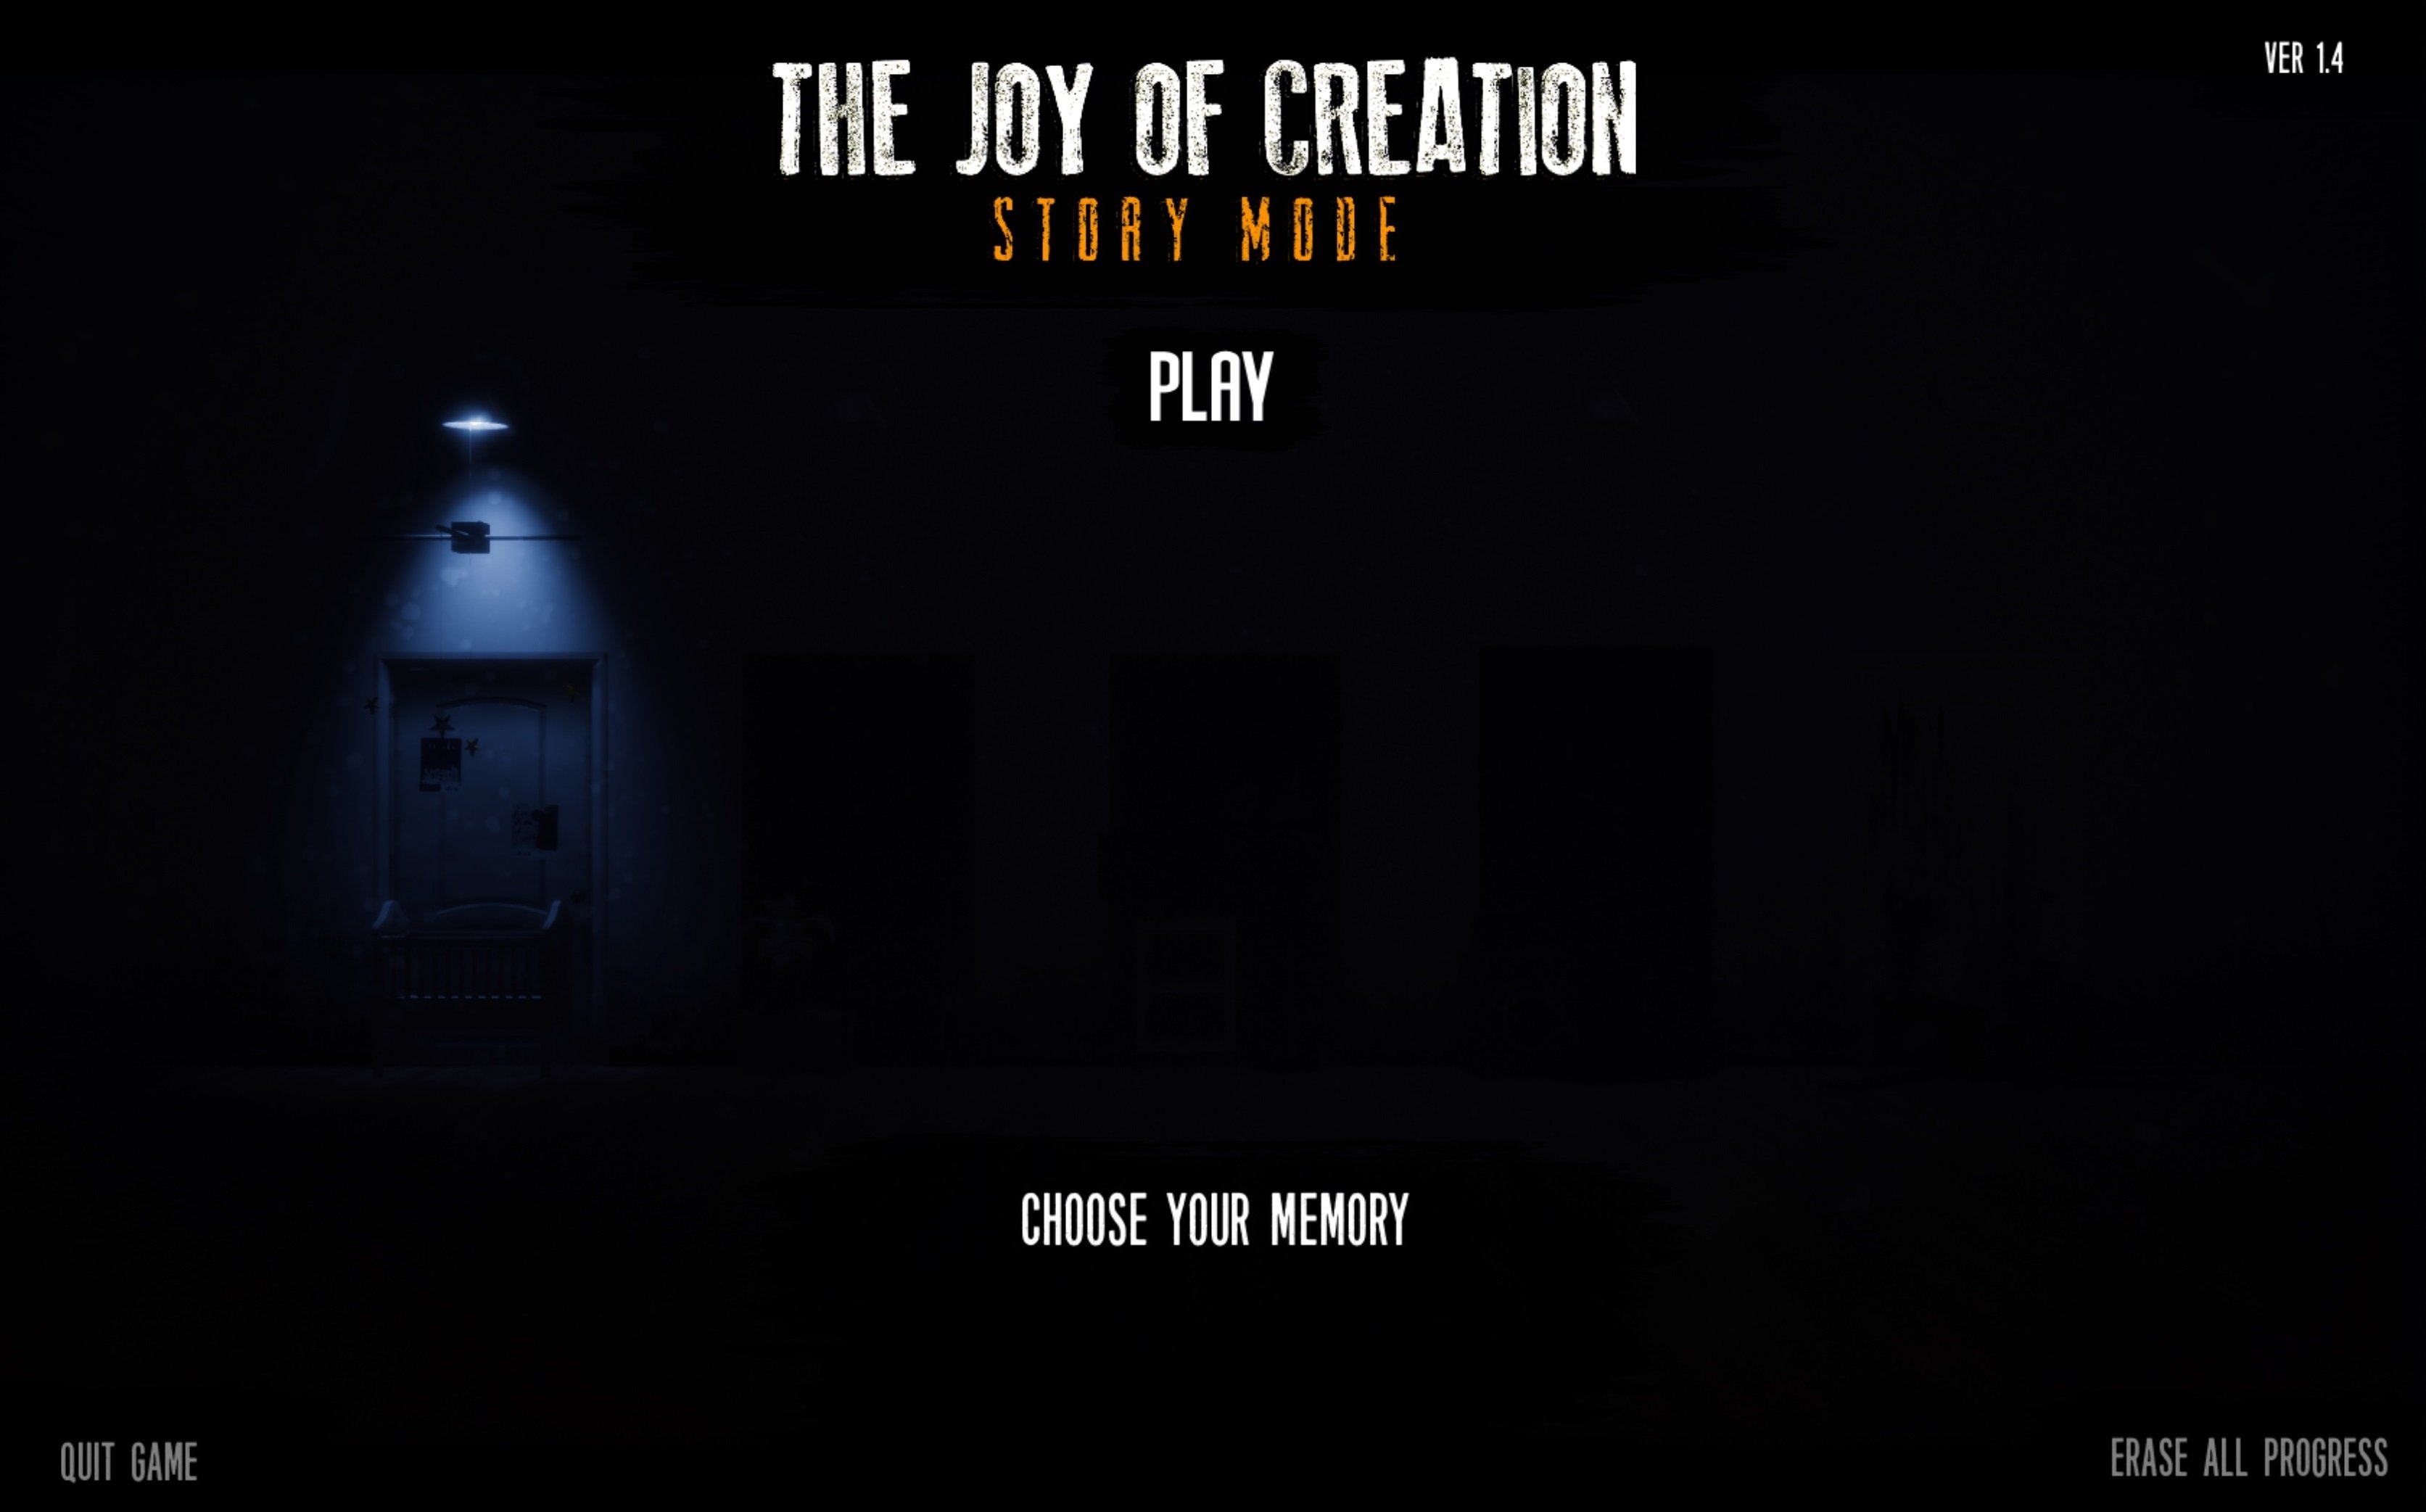 the joy of creation story mode 32 bit